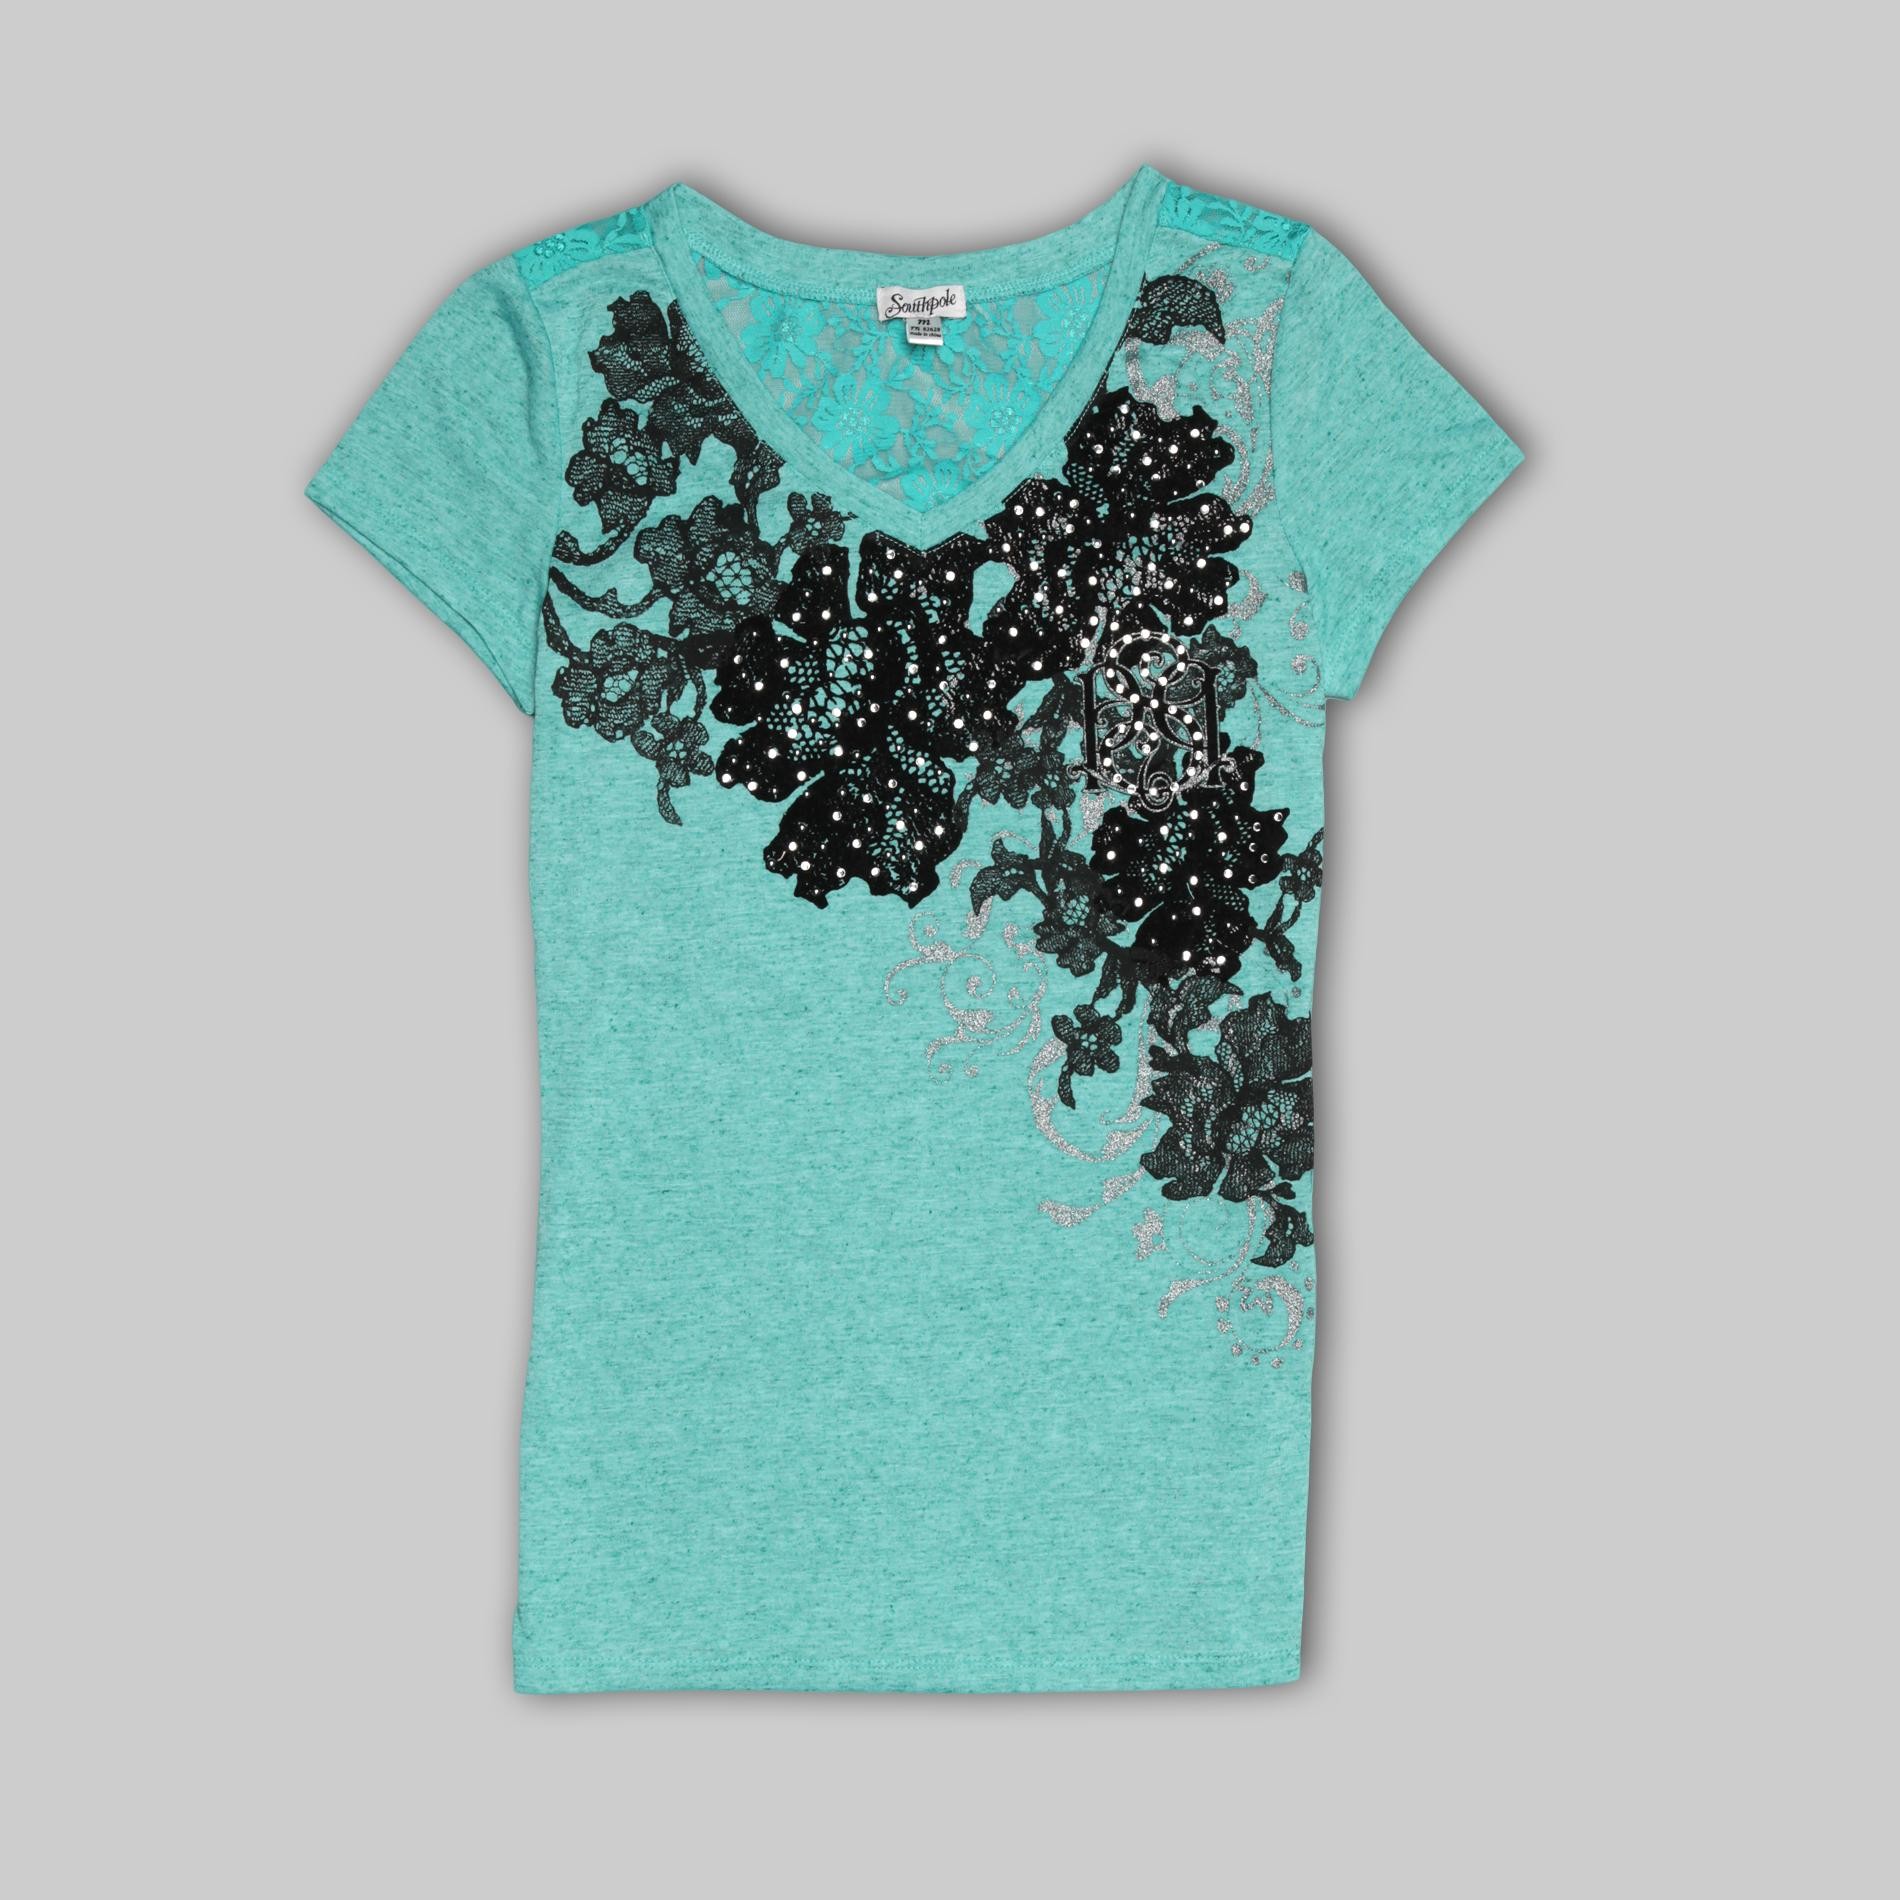 Southpole Junior's Graphic T-Shirt - Lace